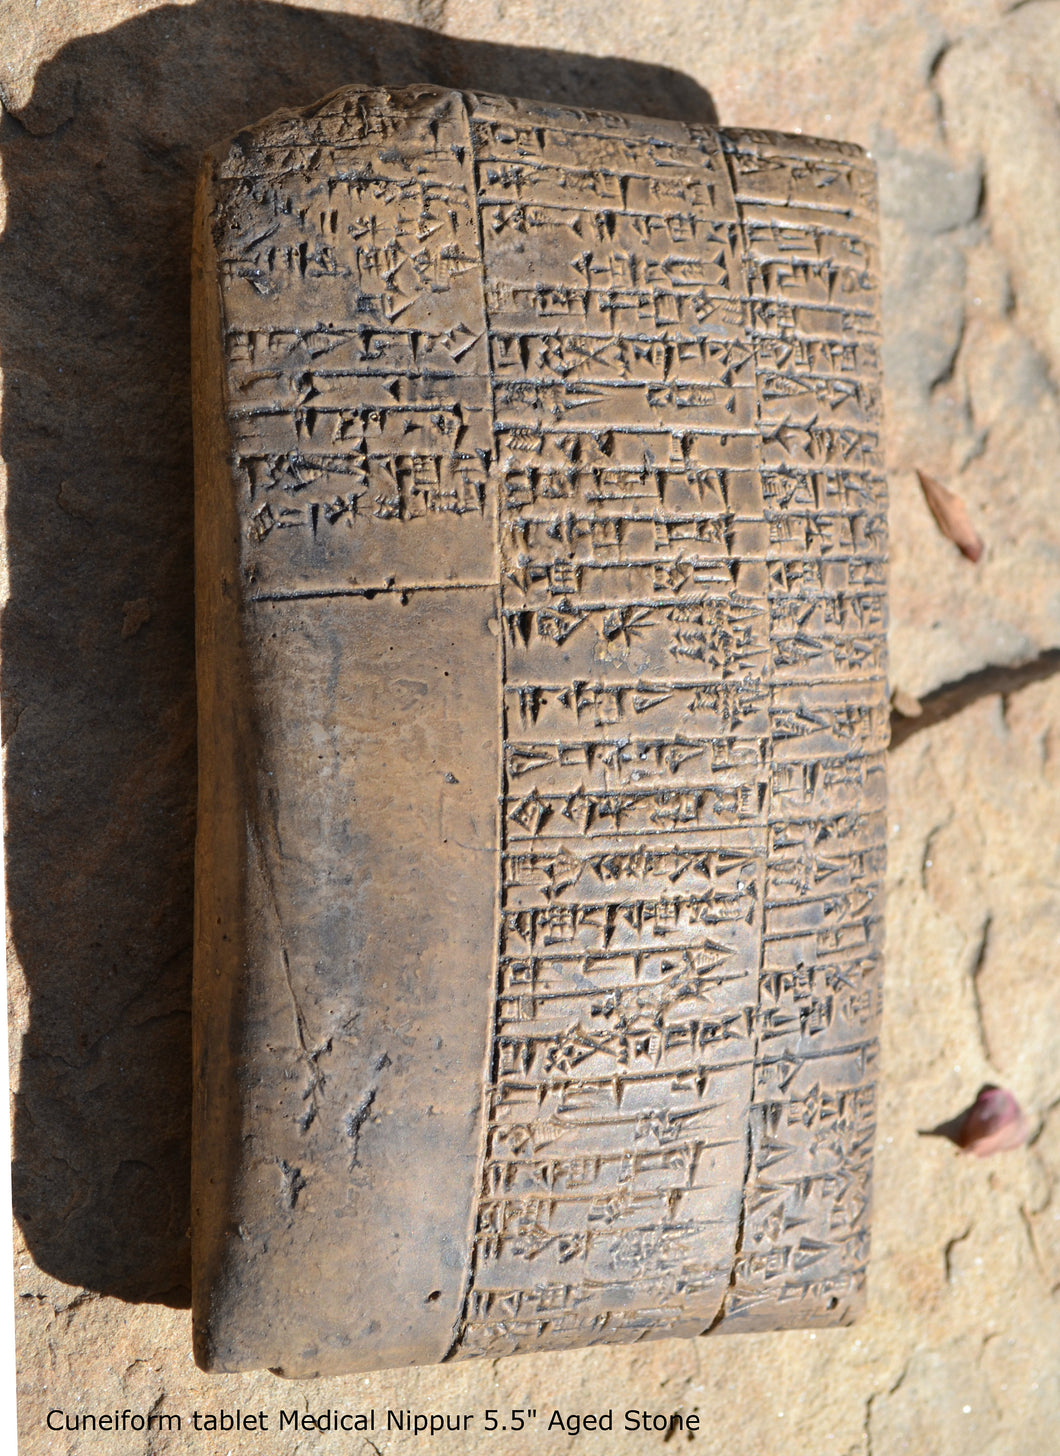 Sumerian Cuneiform tablet Medical Nippur Sculptural relief plaque www.Neo-Mfg.com 5.5